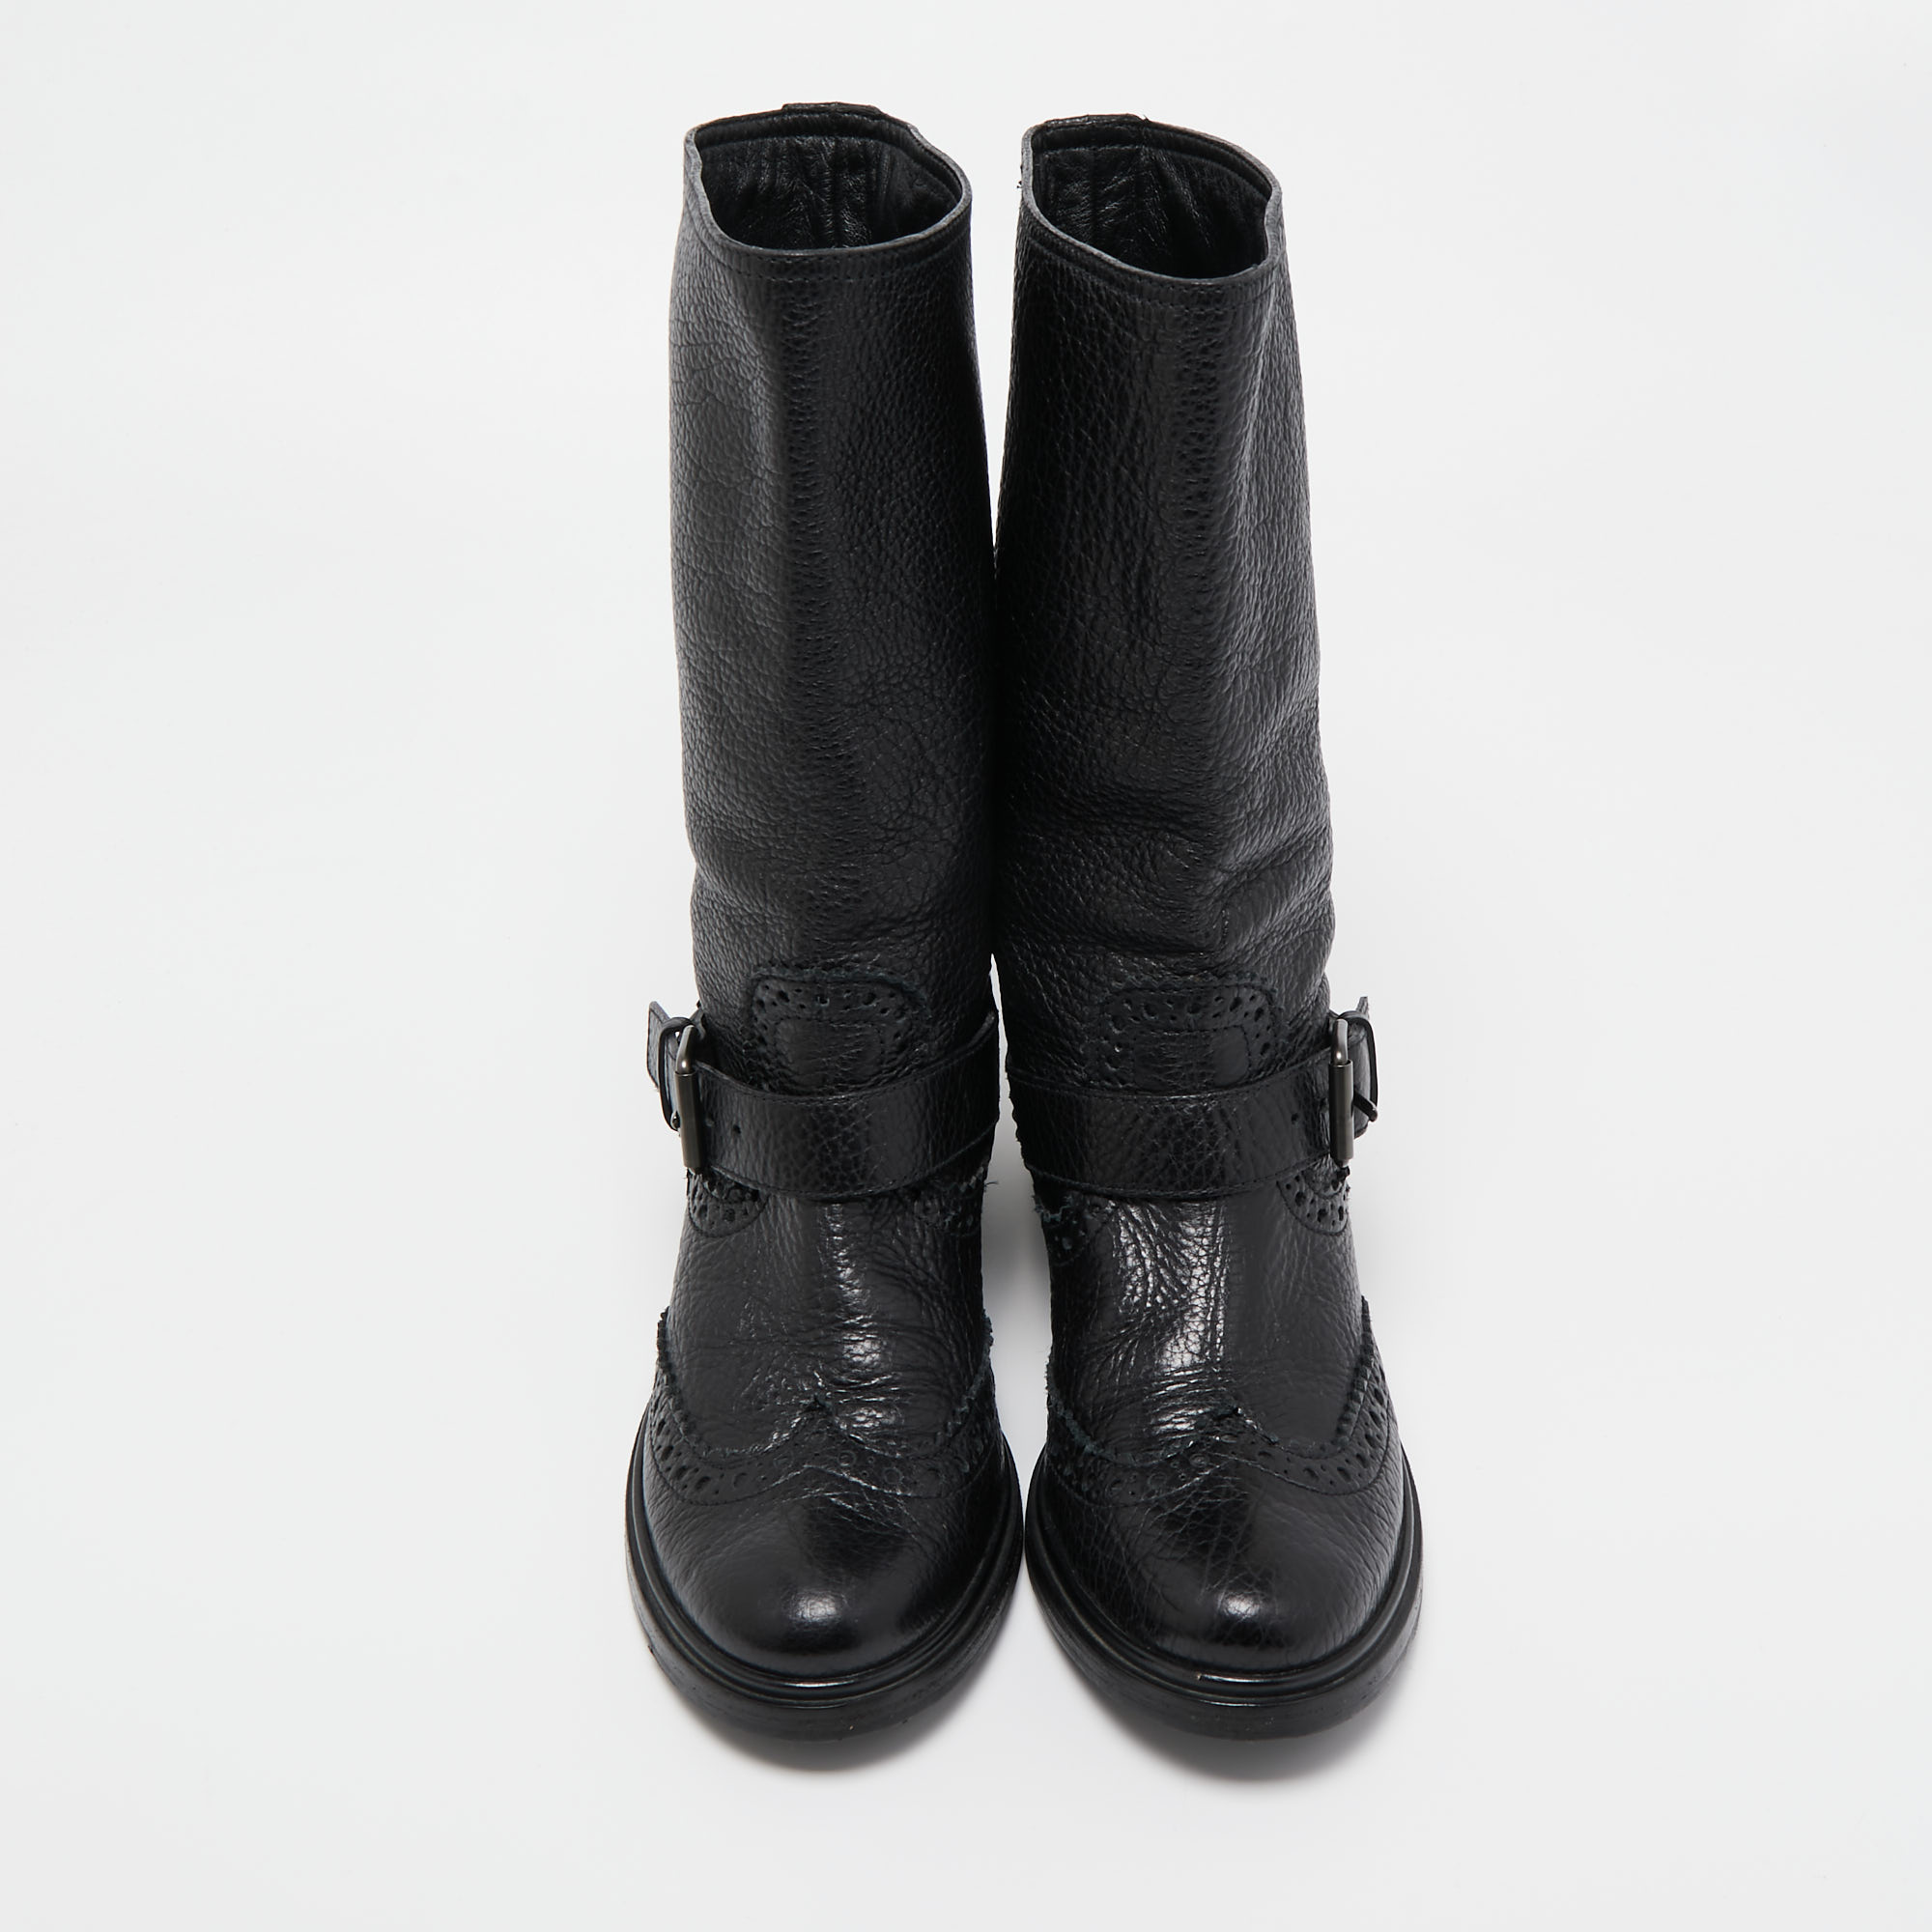 Miu Miu Black Brogue Leather Buckle Detail Mid Calf Boots Size 38.5